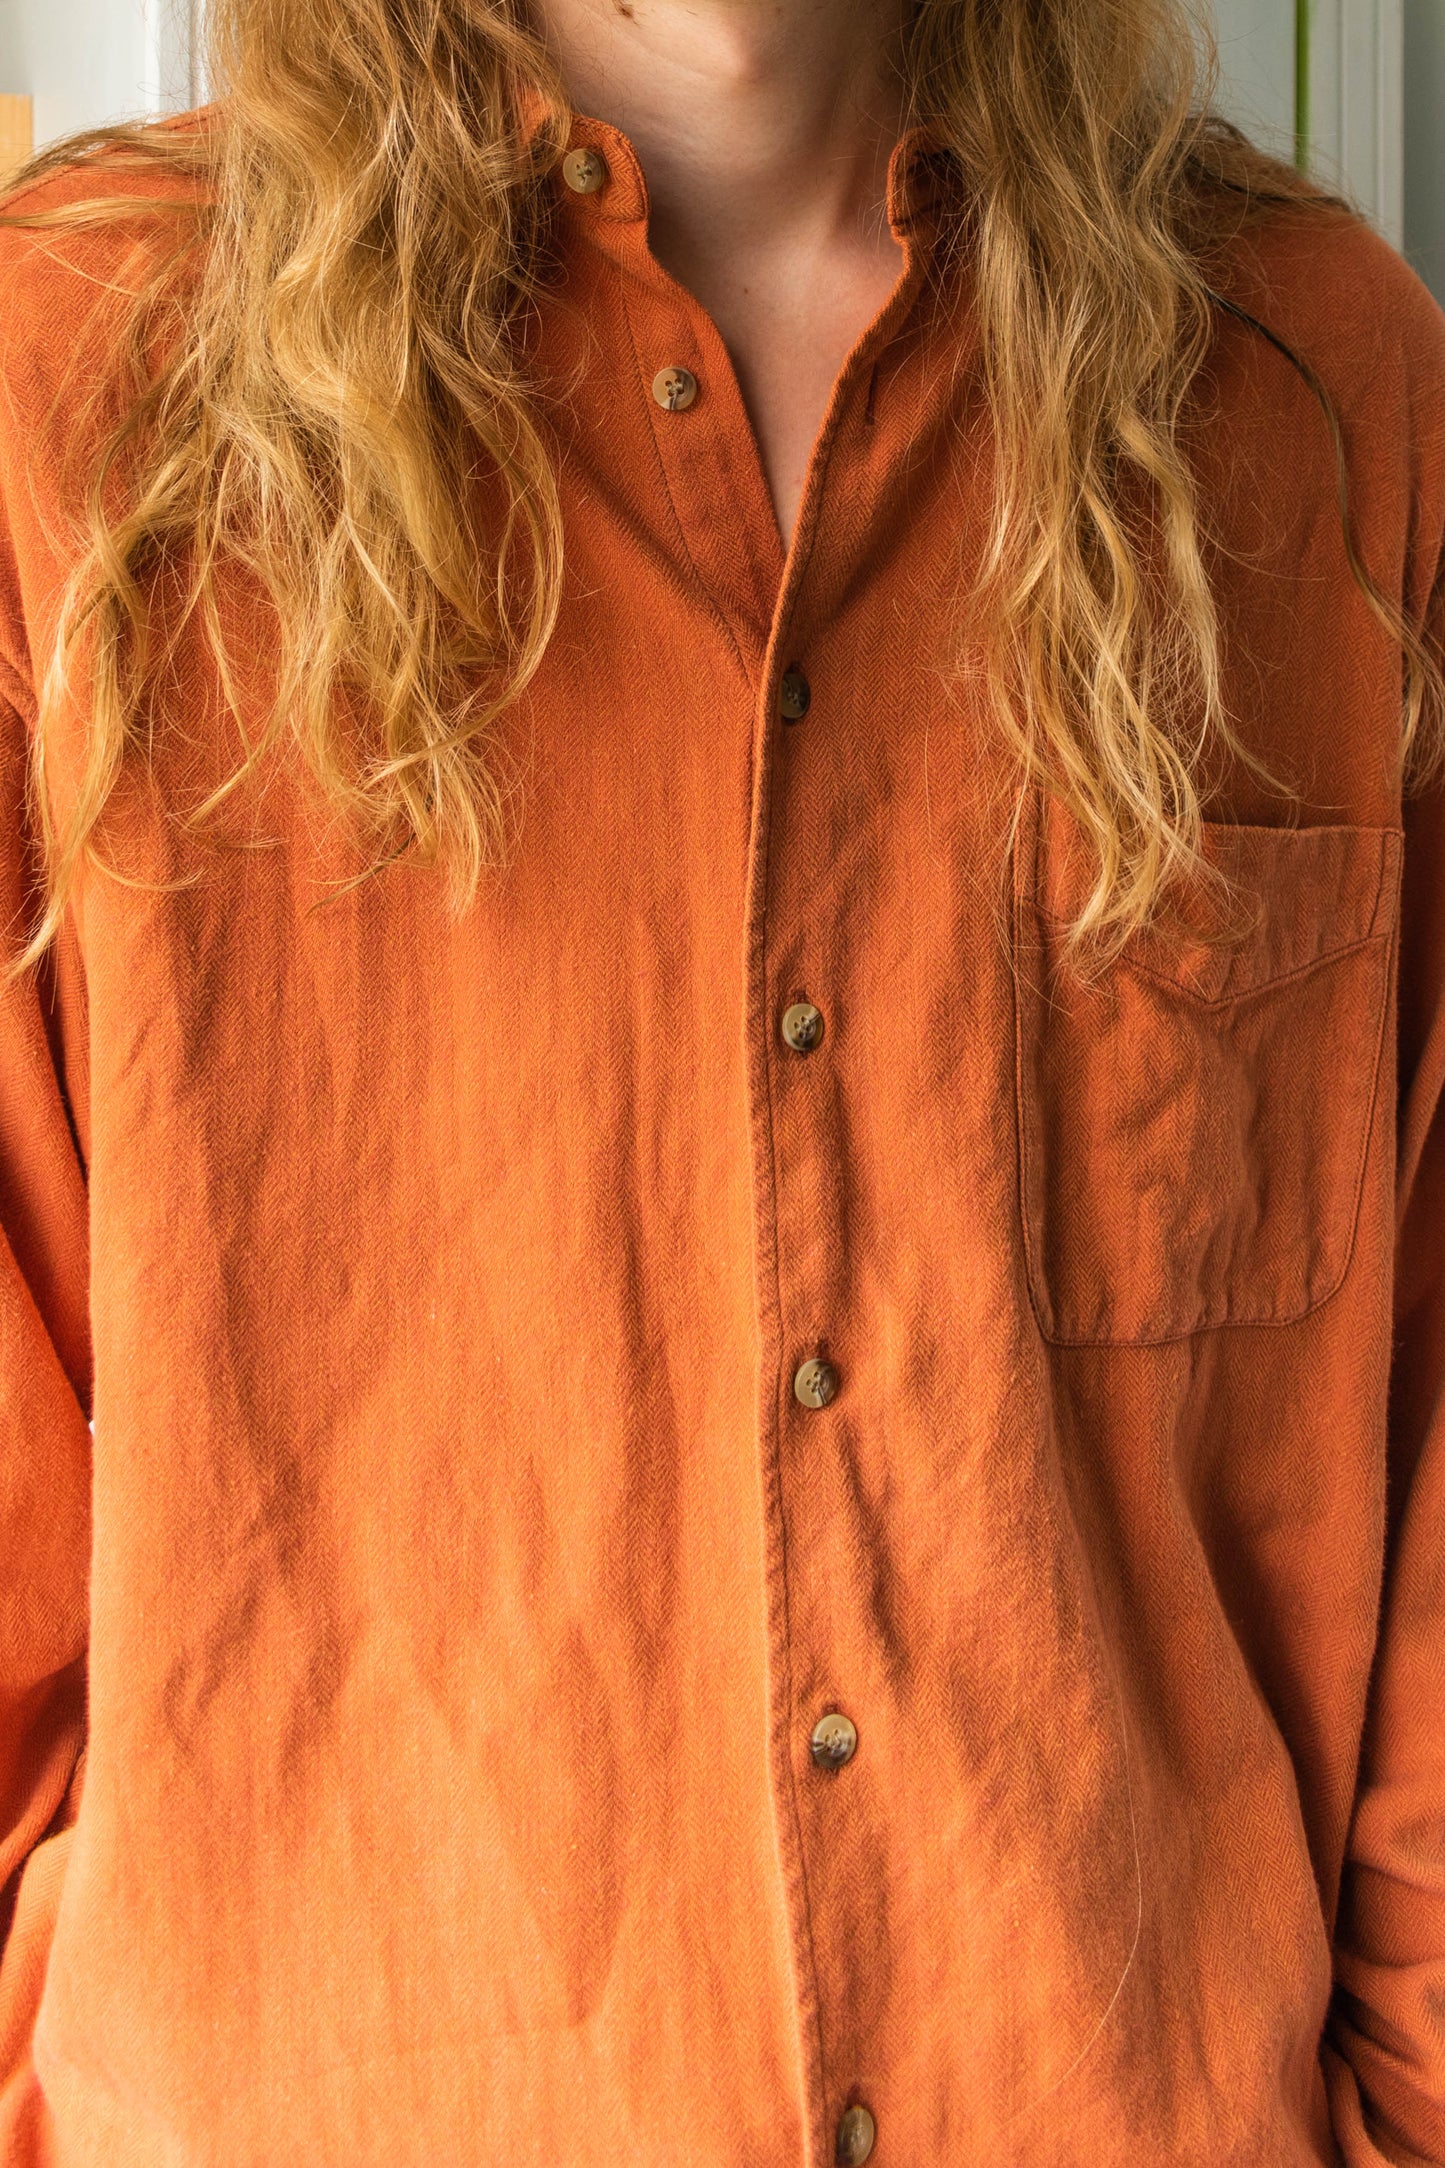 NEW IN! Orange shirt